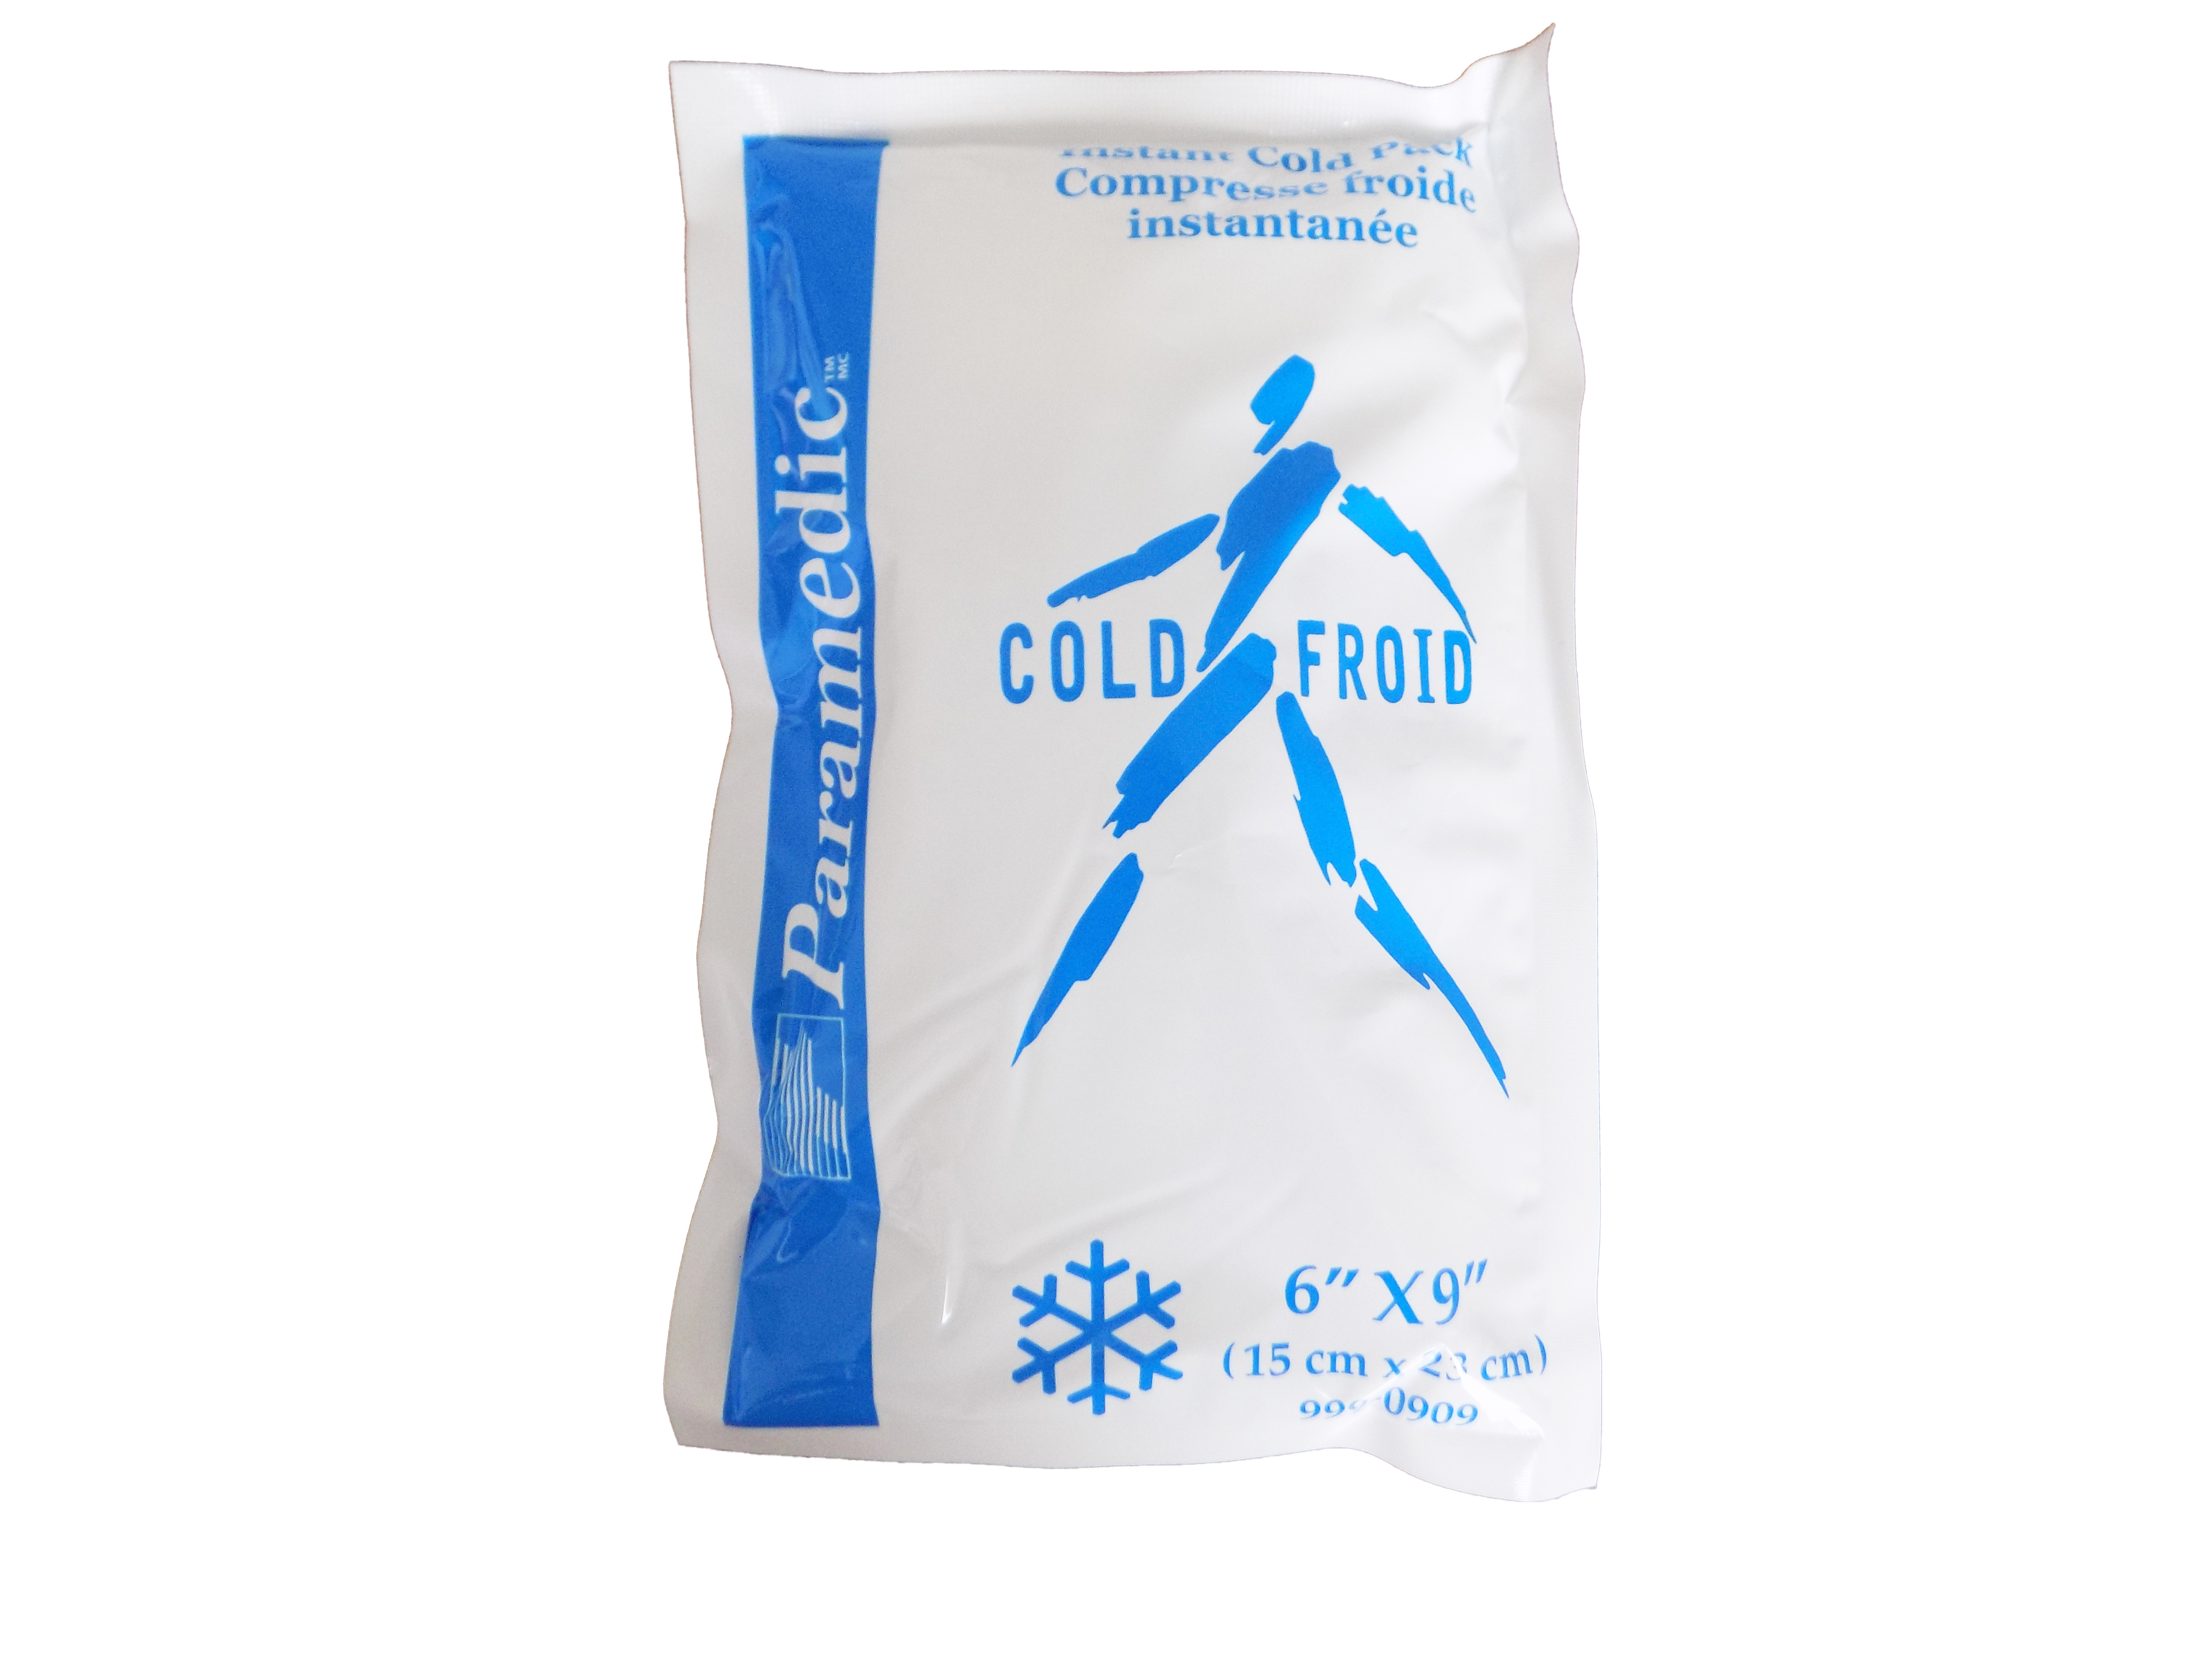 Non-Freeze Instant Cold Pack – St John Ambulance National Online Shop